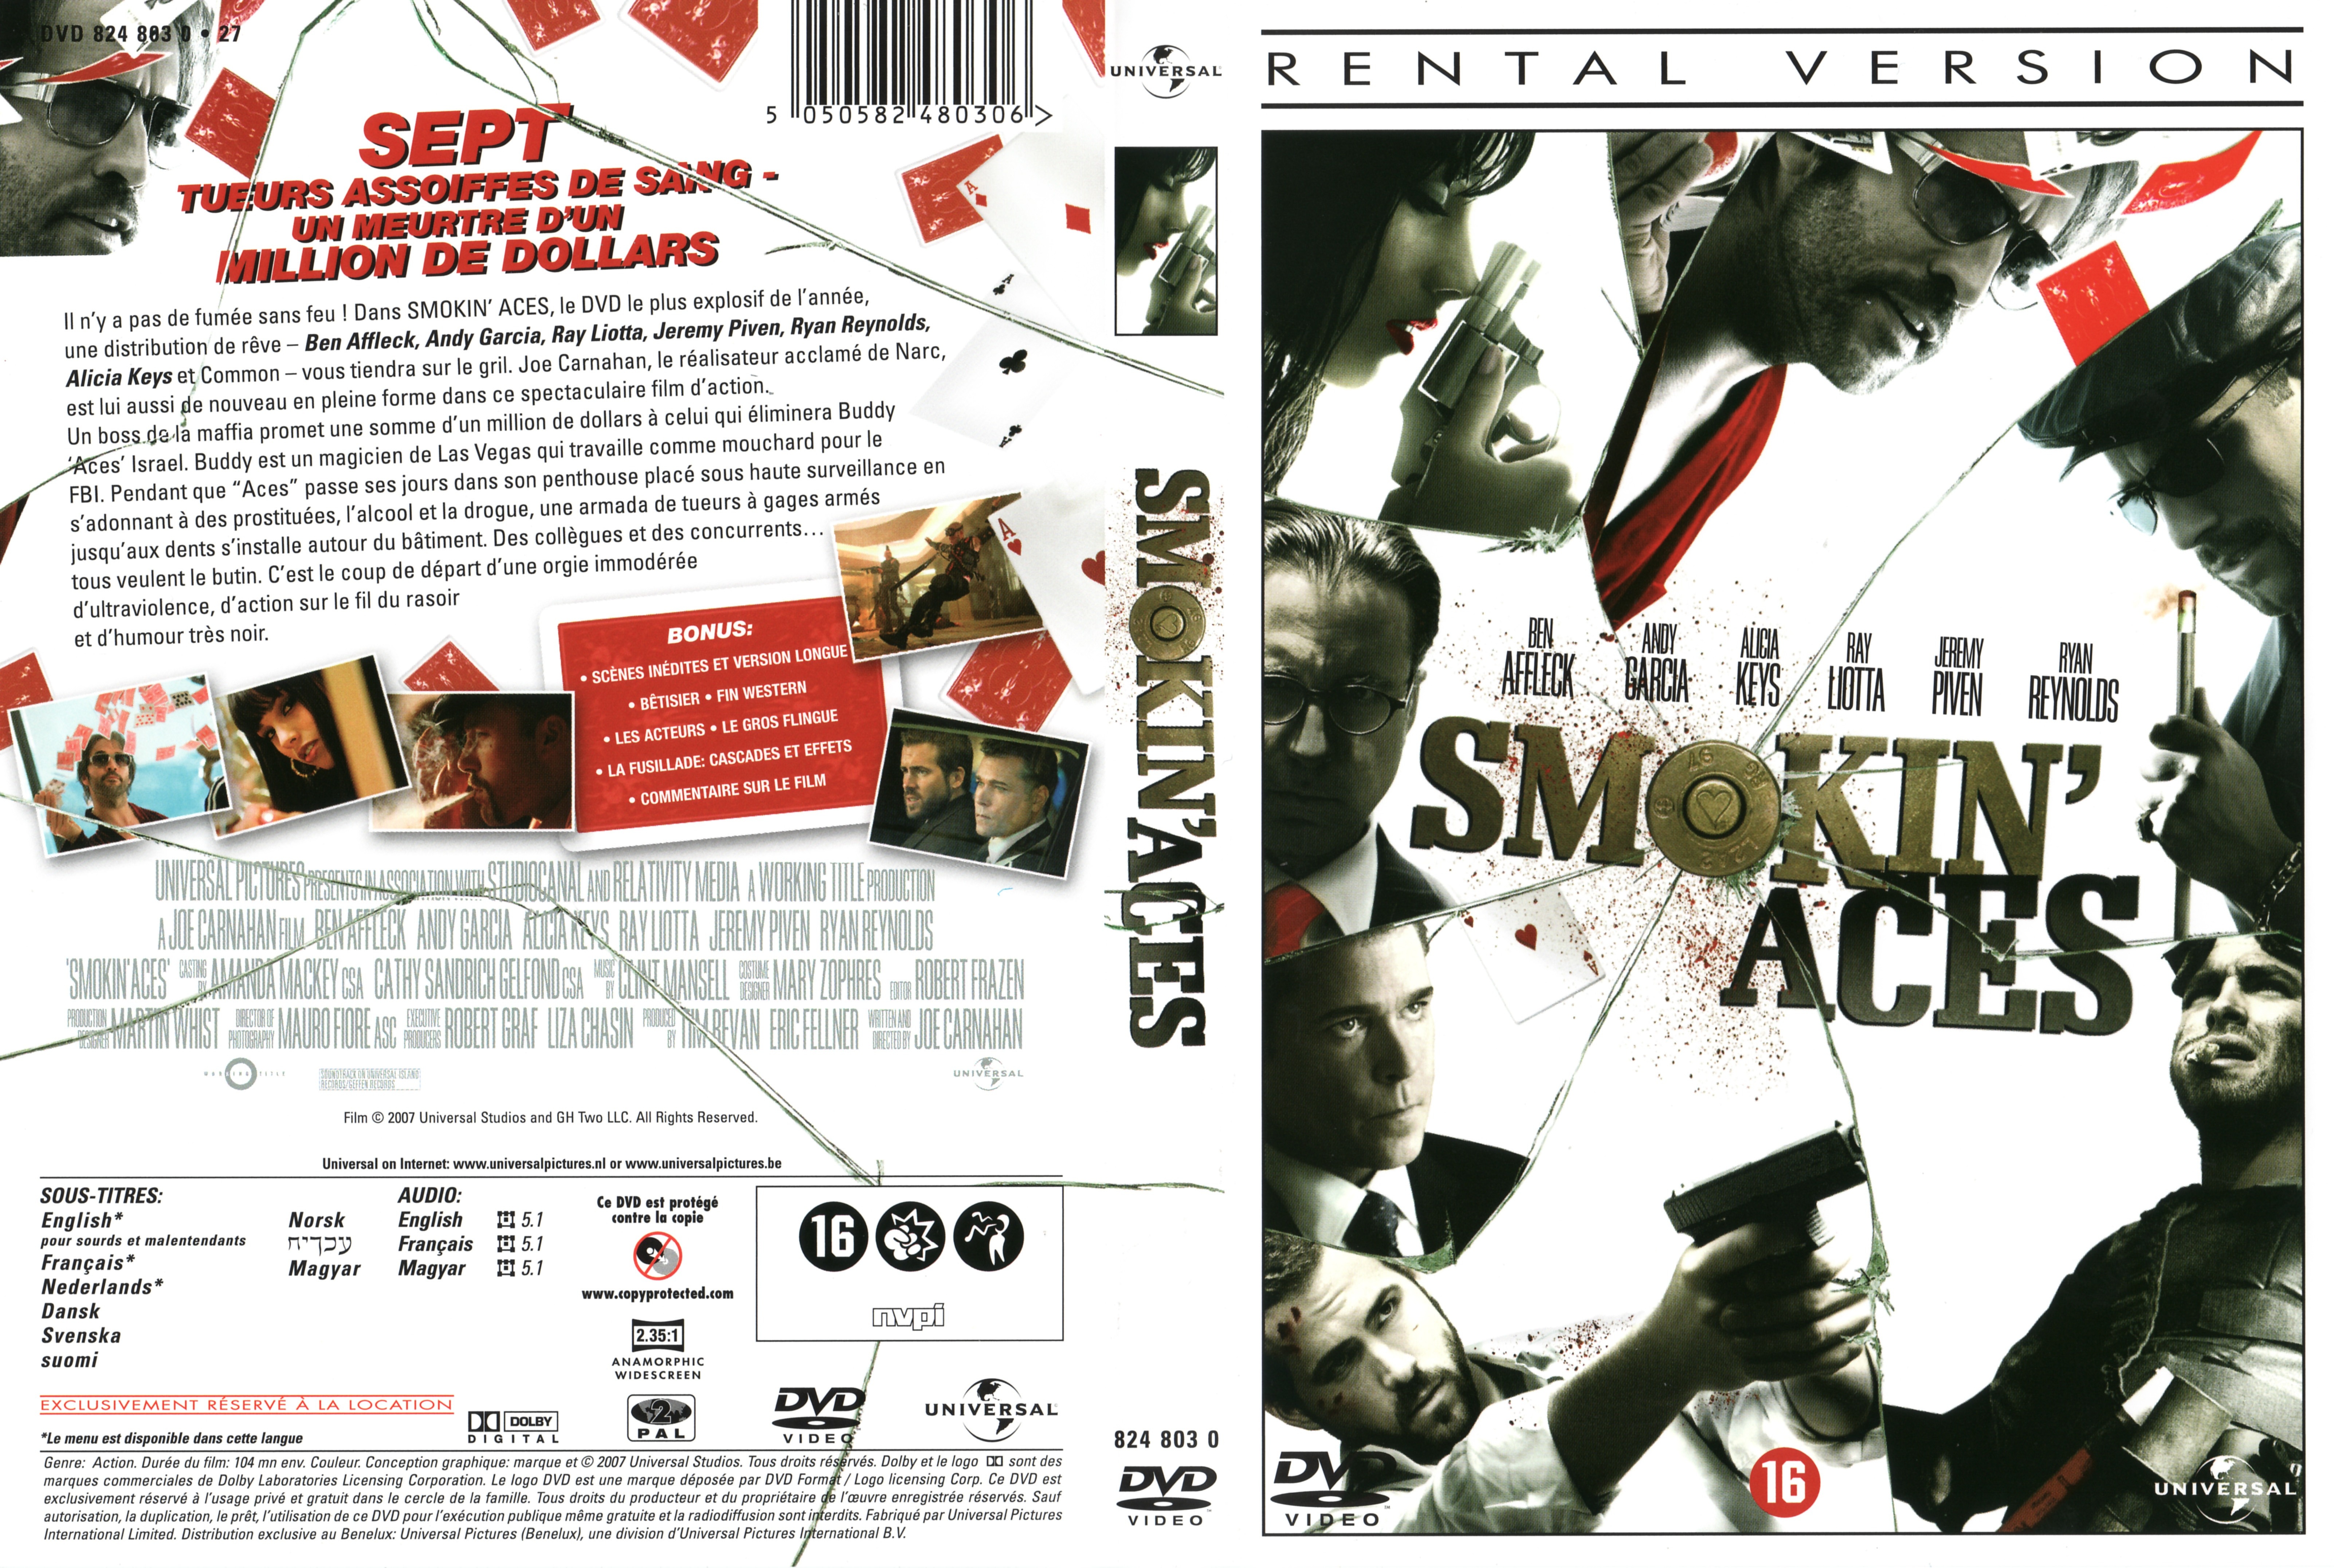 Jaquette DVD Smokin aces